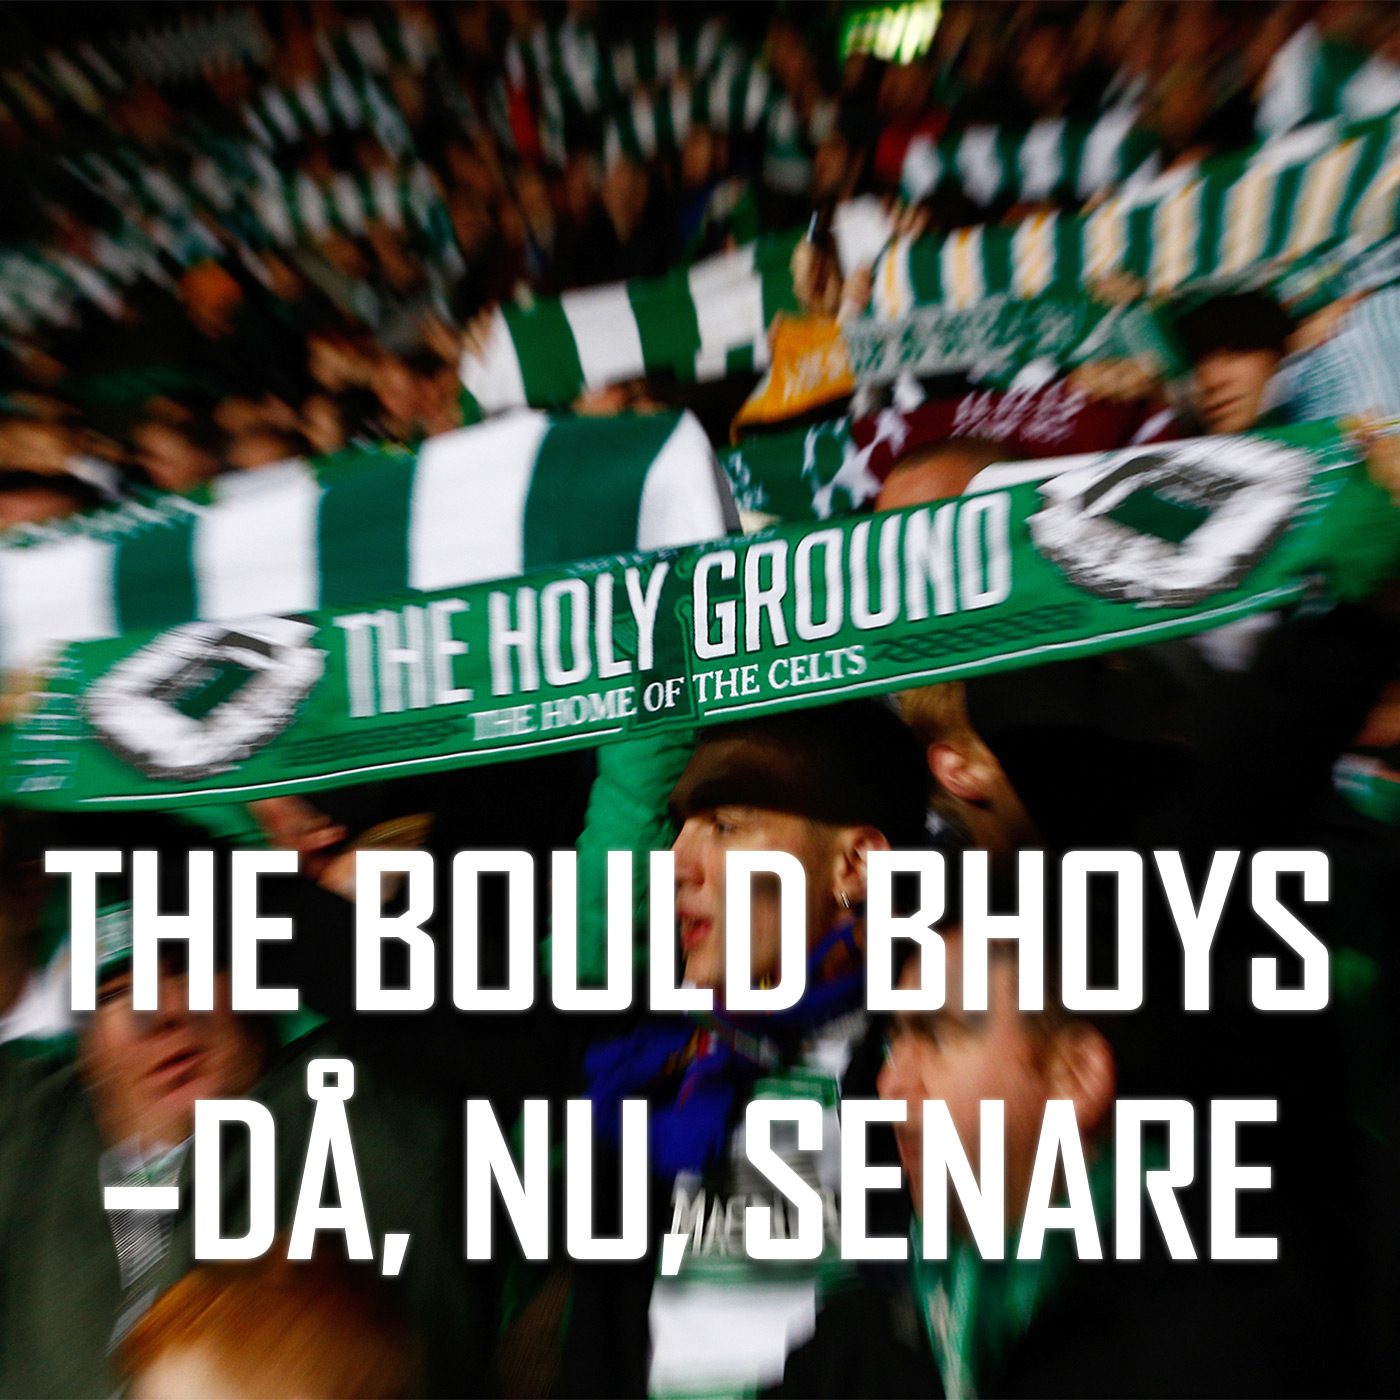 The Bould Bhoys – Då, Nu, Senare